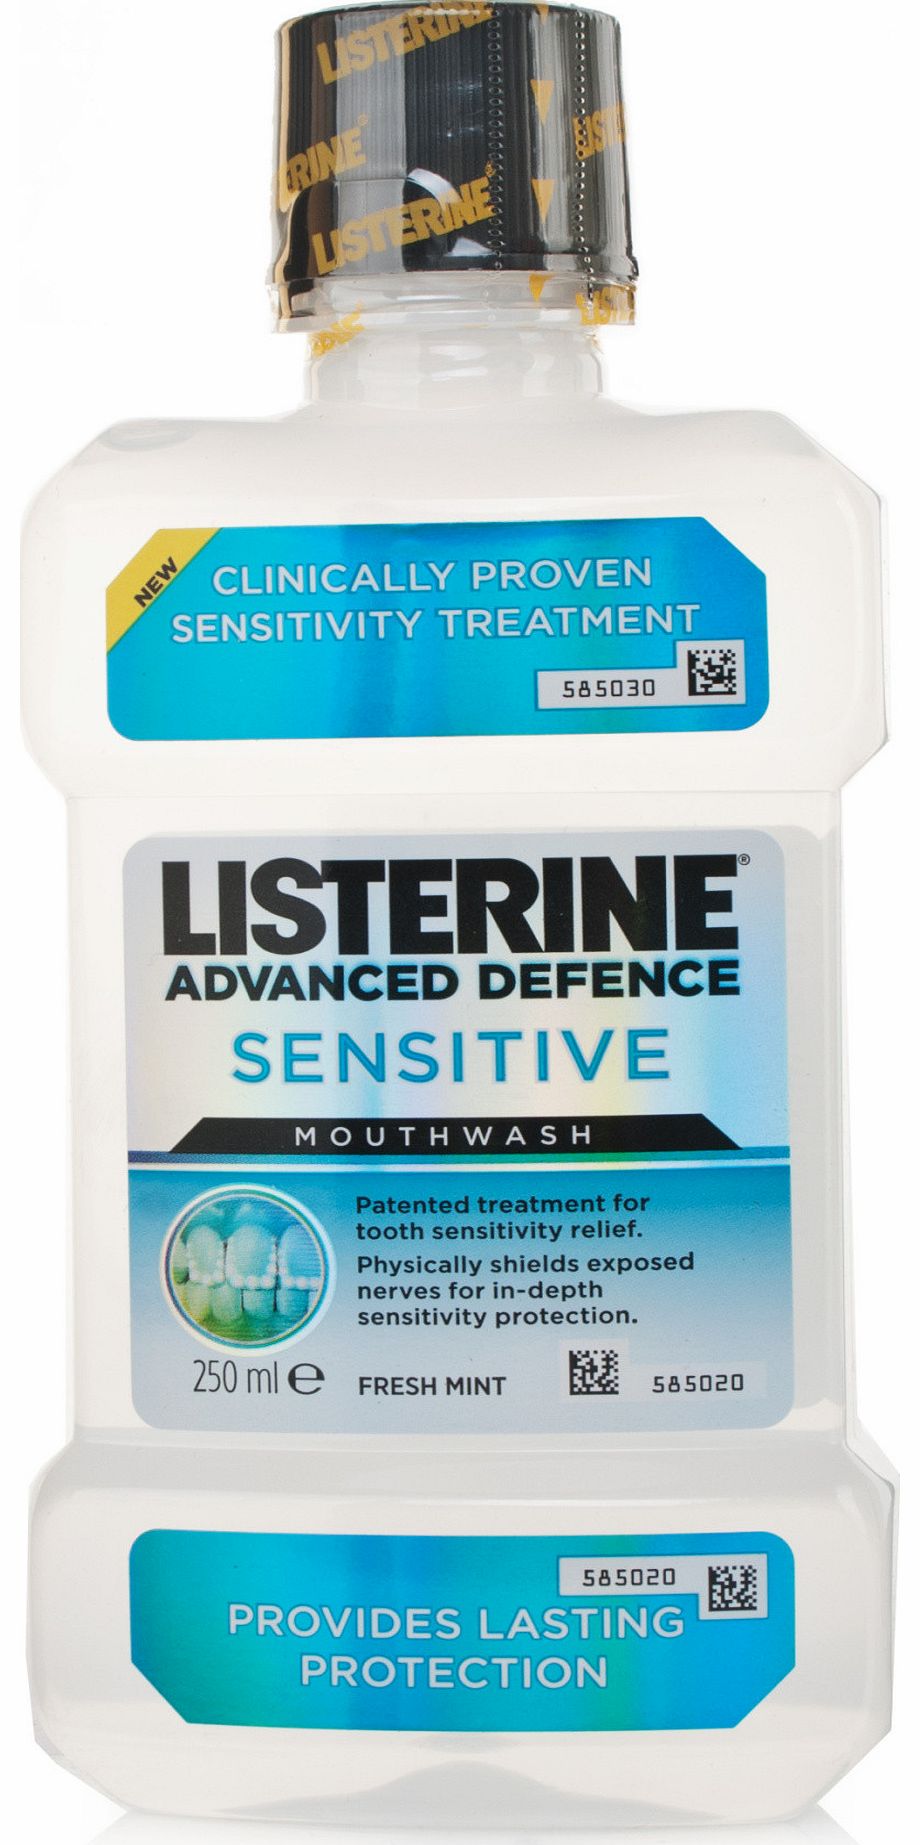 Listerine Advanced Defence Sensitive Mouthwash